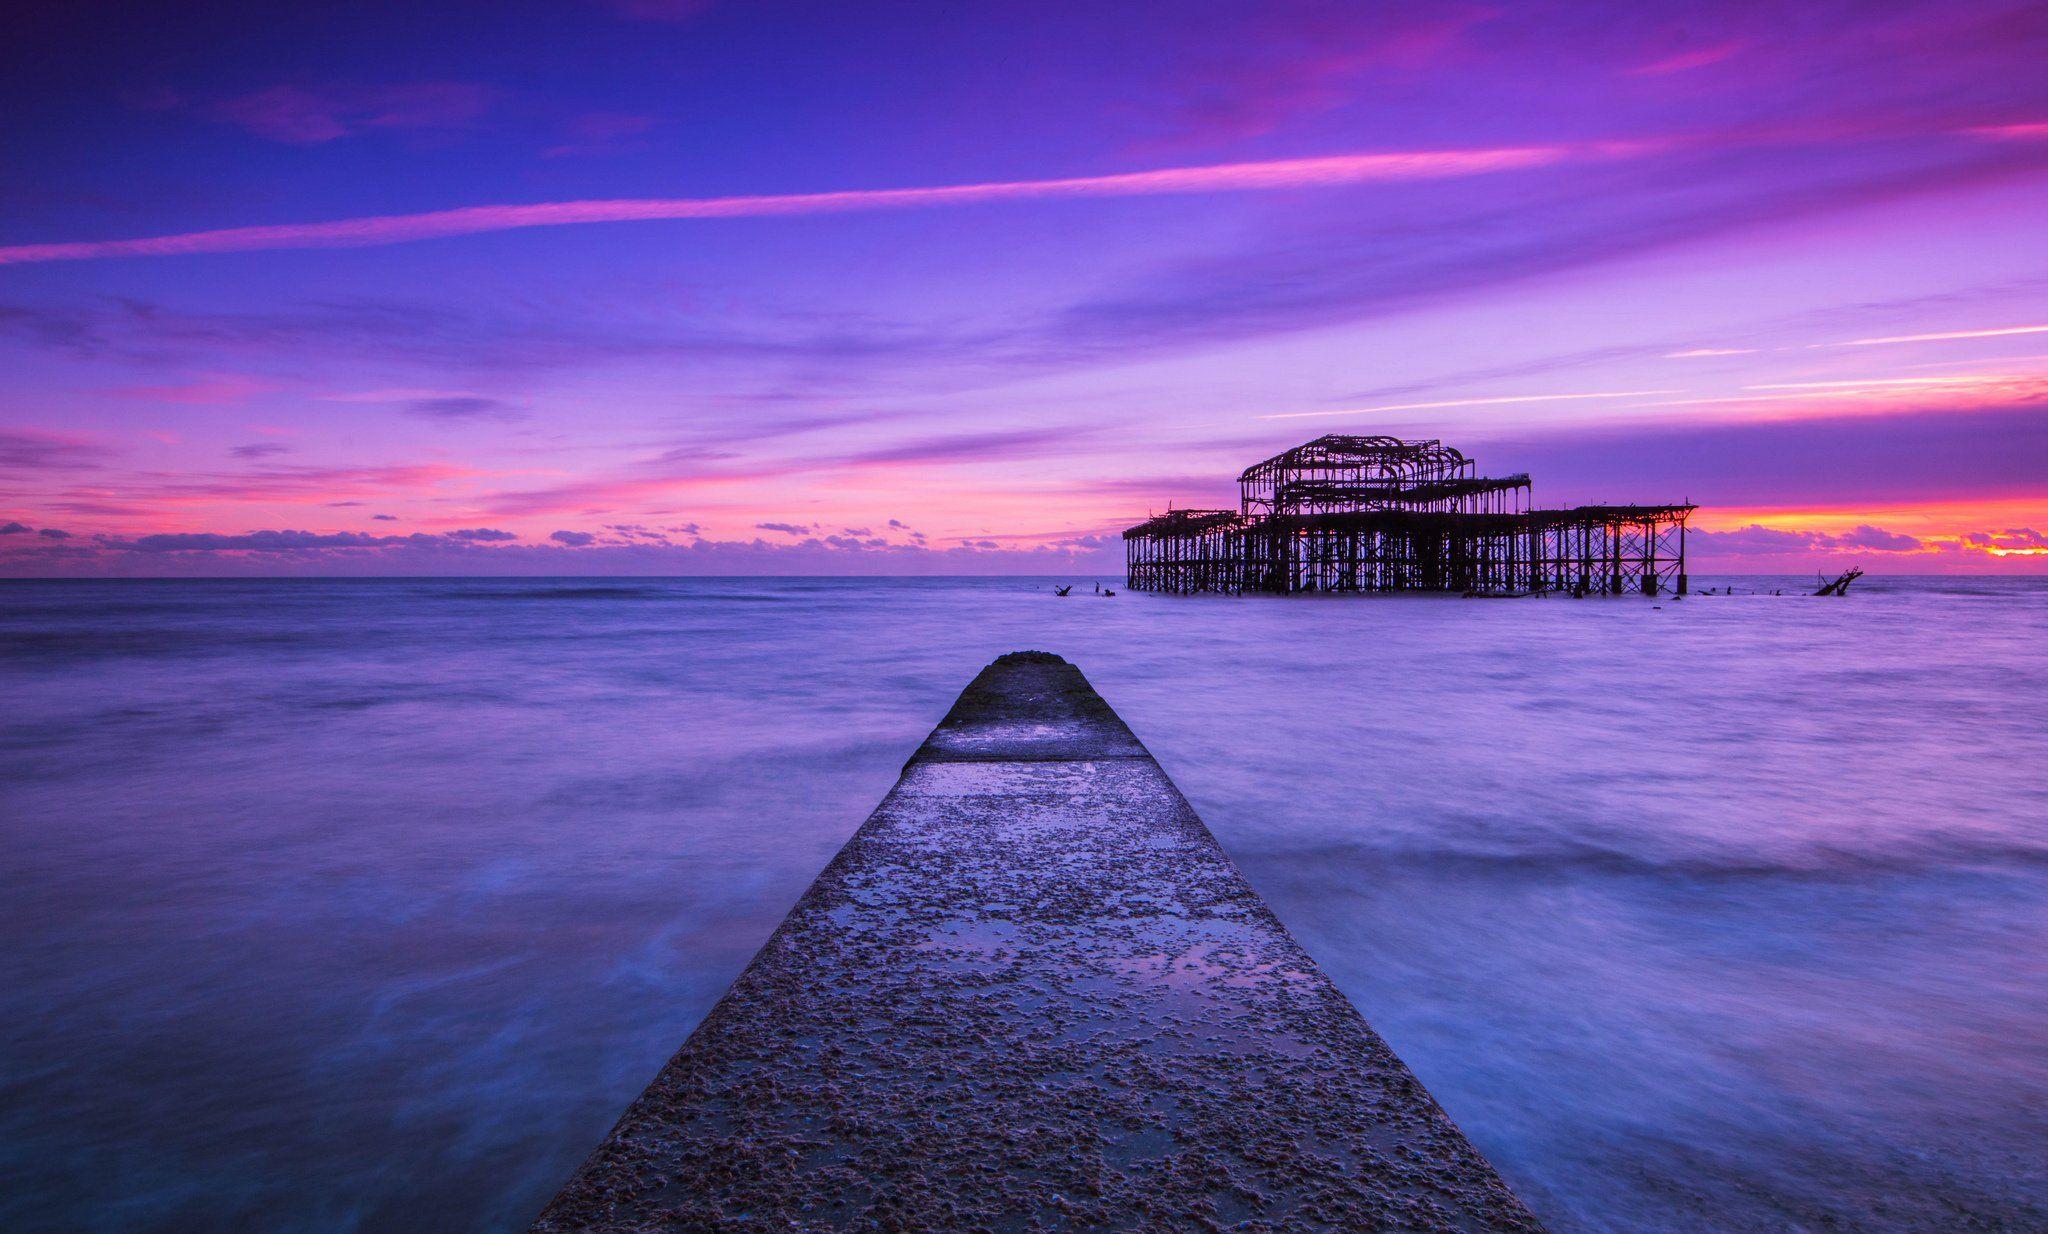 Brighton Background and Image (44)